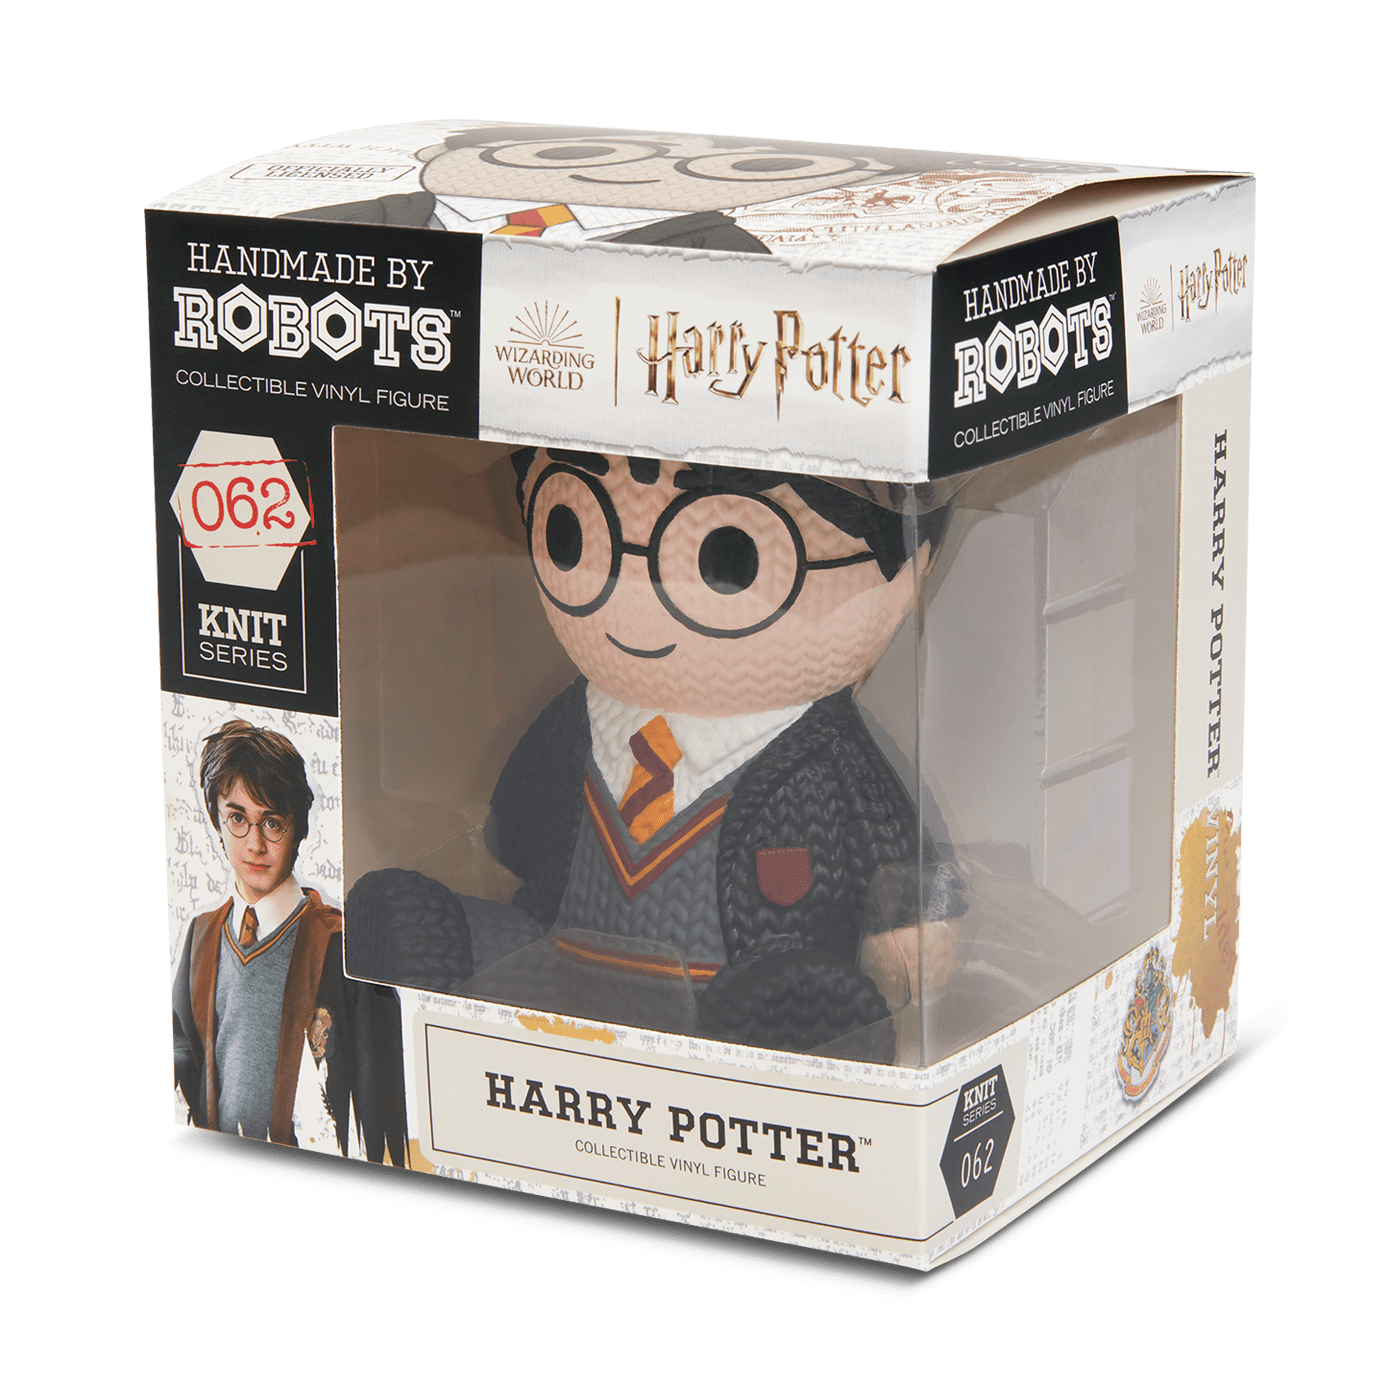 Harry Potter #062 - Harry Potter - Handmade by Robots – H&P